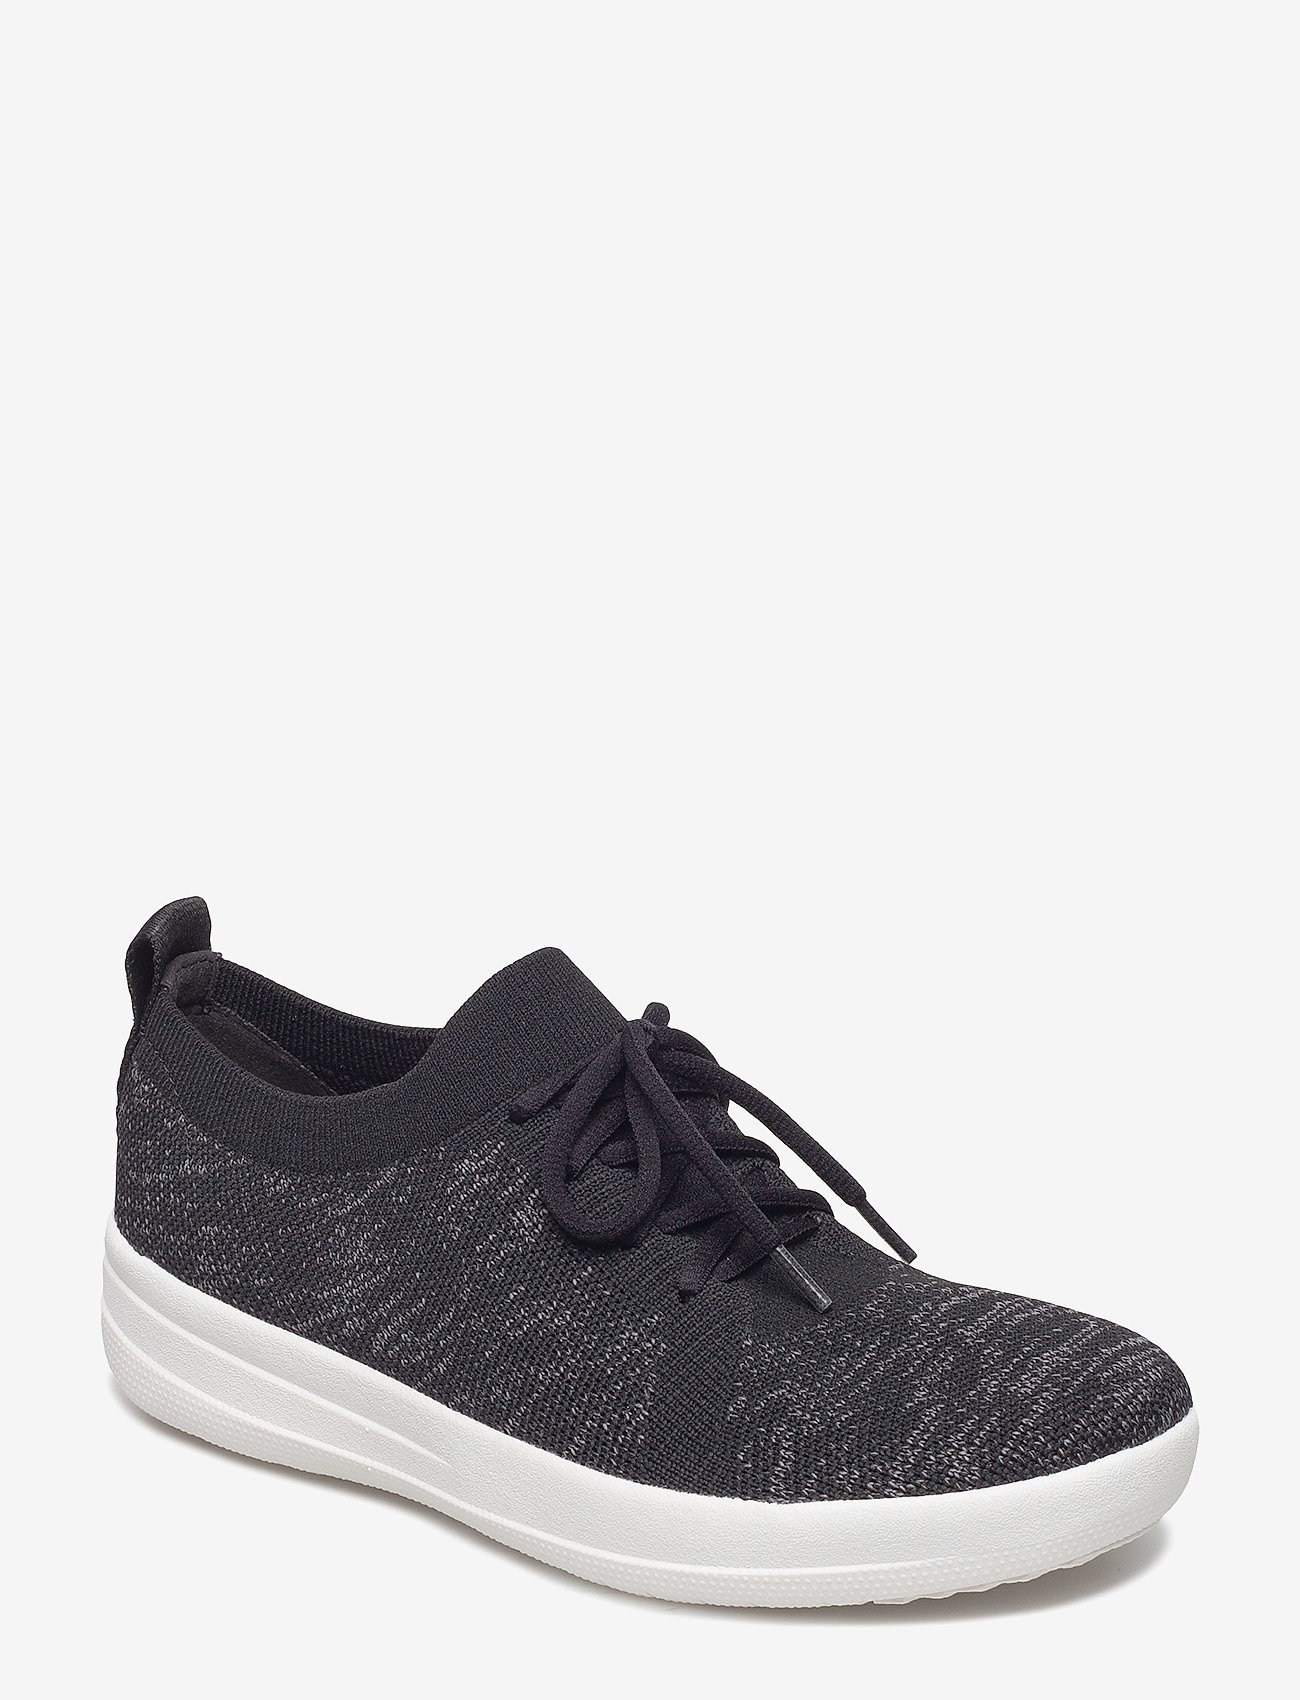 F-sporty Uberknit Sneakers (Black) (70 